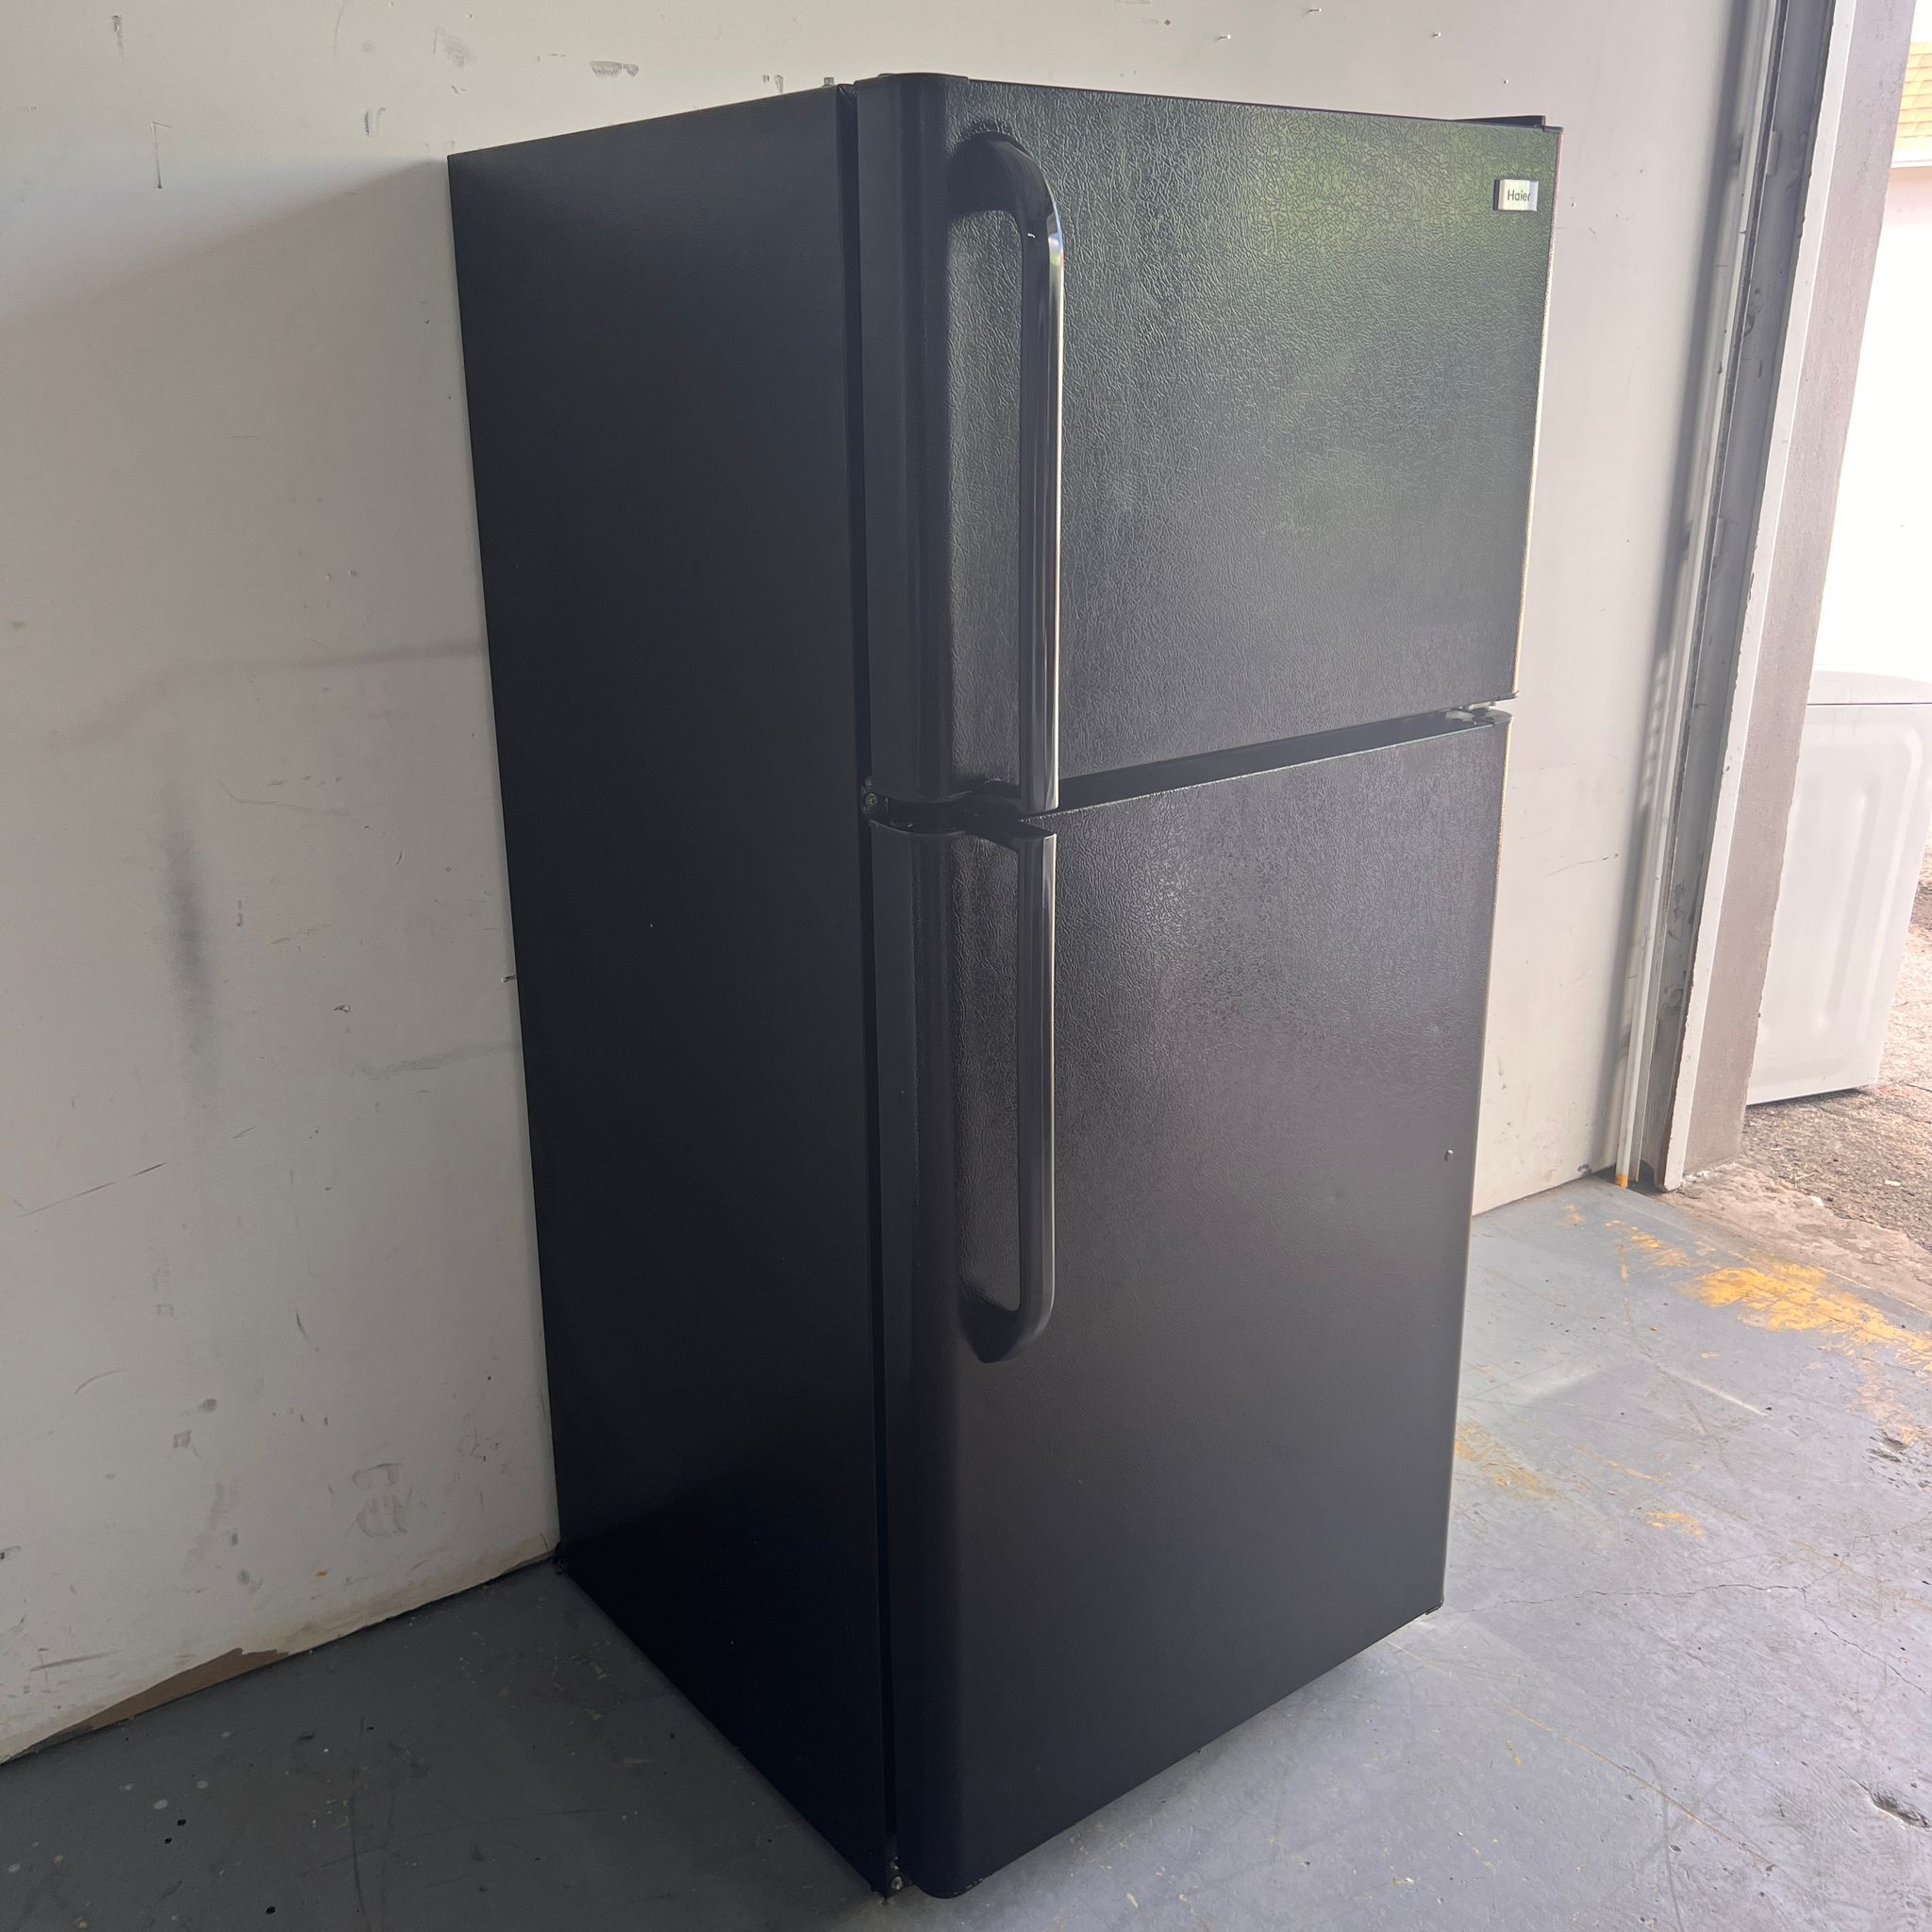 Haier Black Top and Bottom Refrigerator